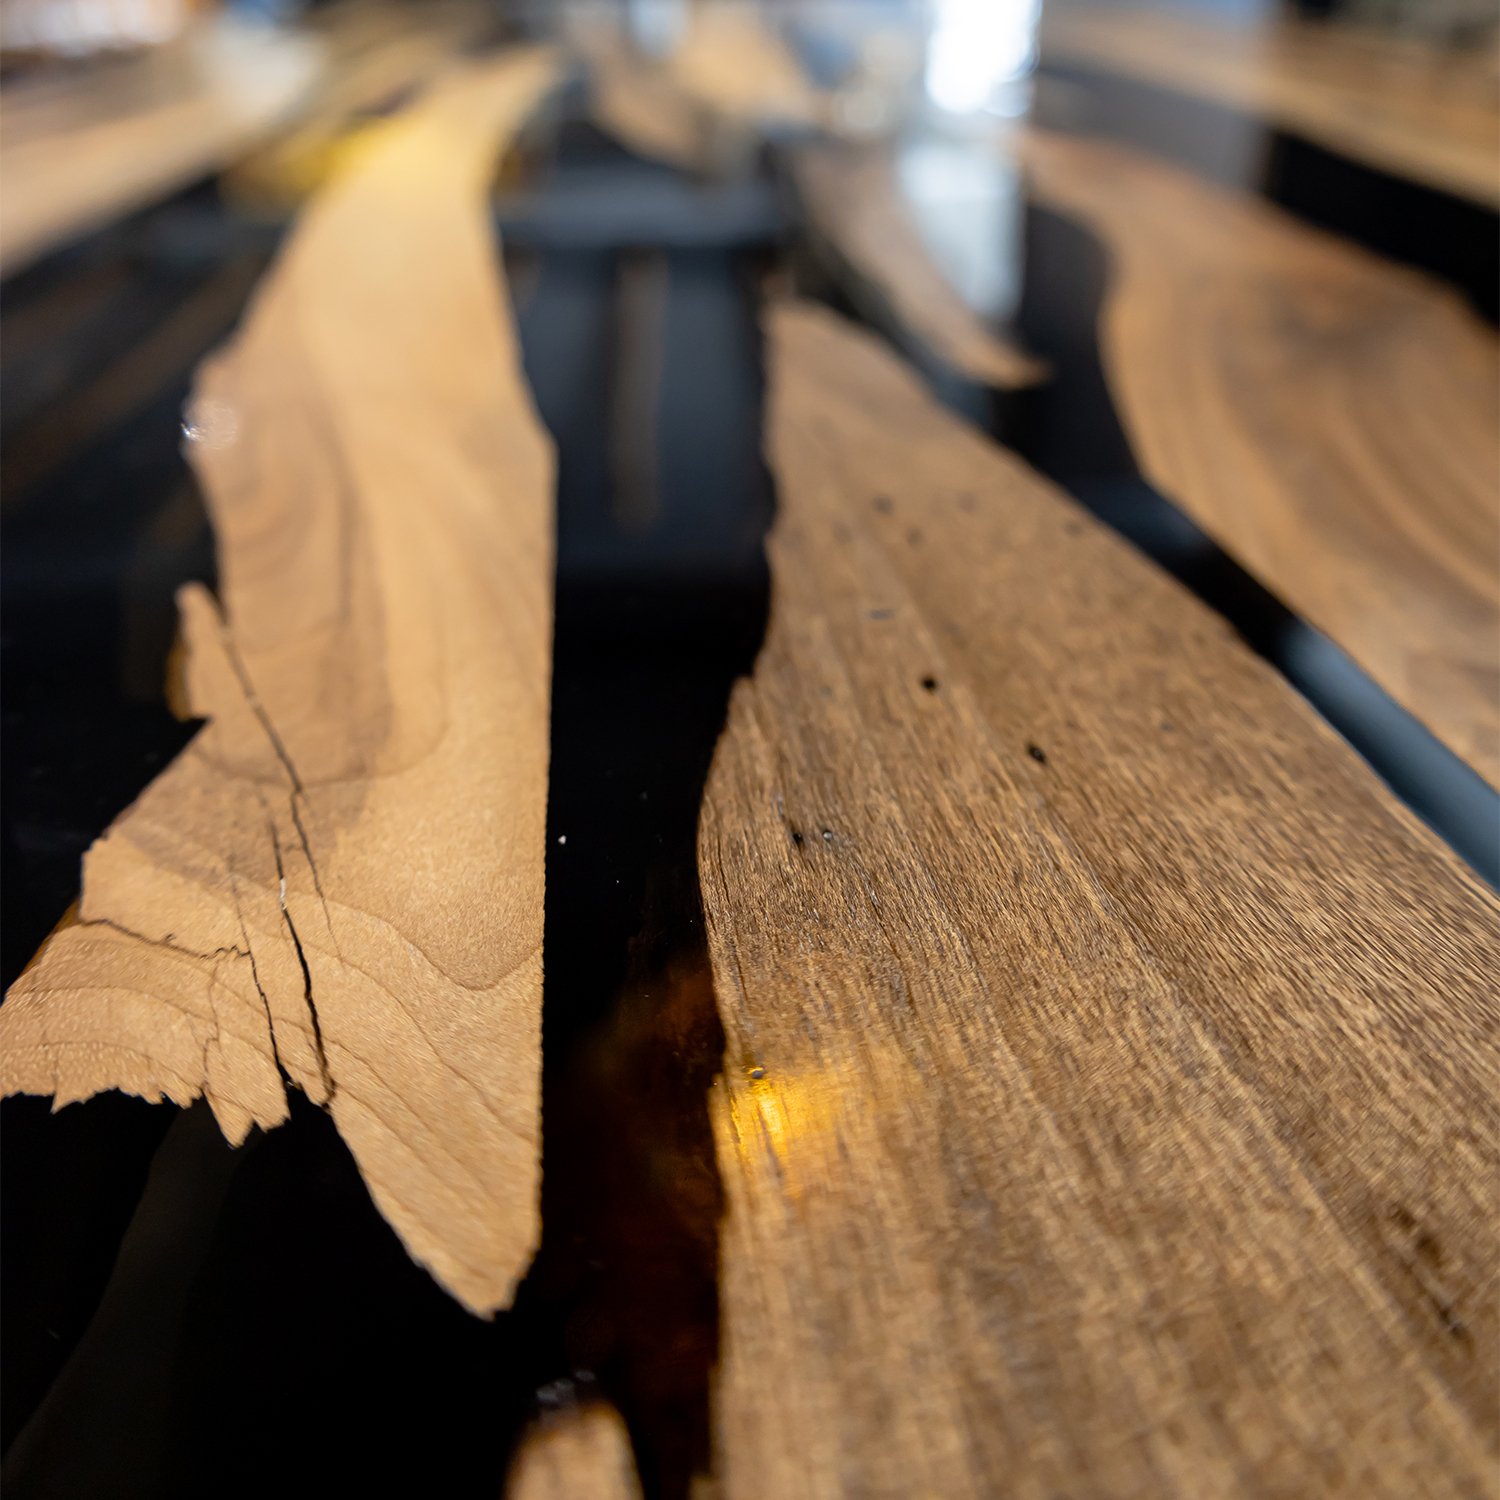 darkstone epoksi ahsap masa darkstone epoxy wooden table 10 1 - darkstone epoxy table